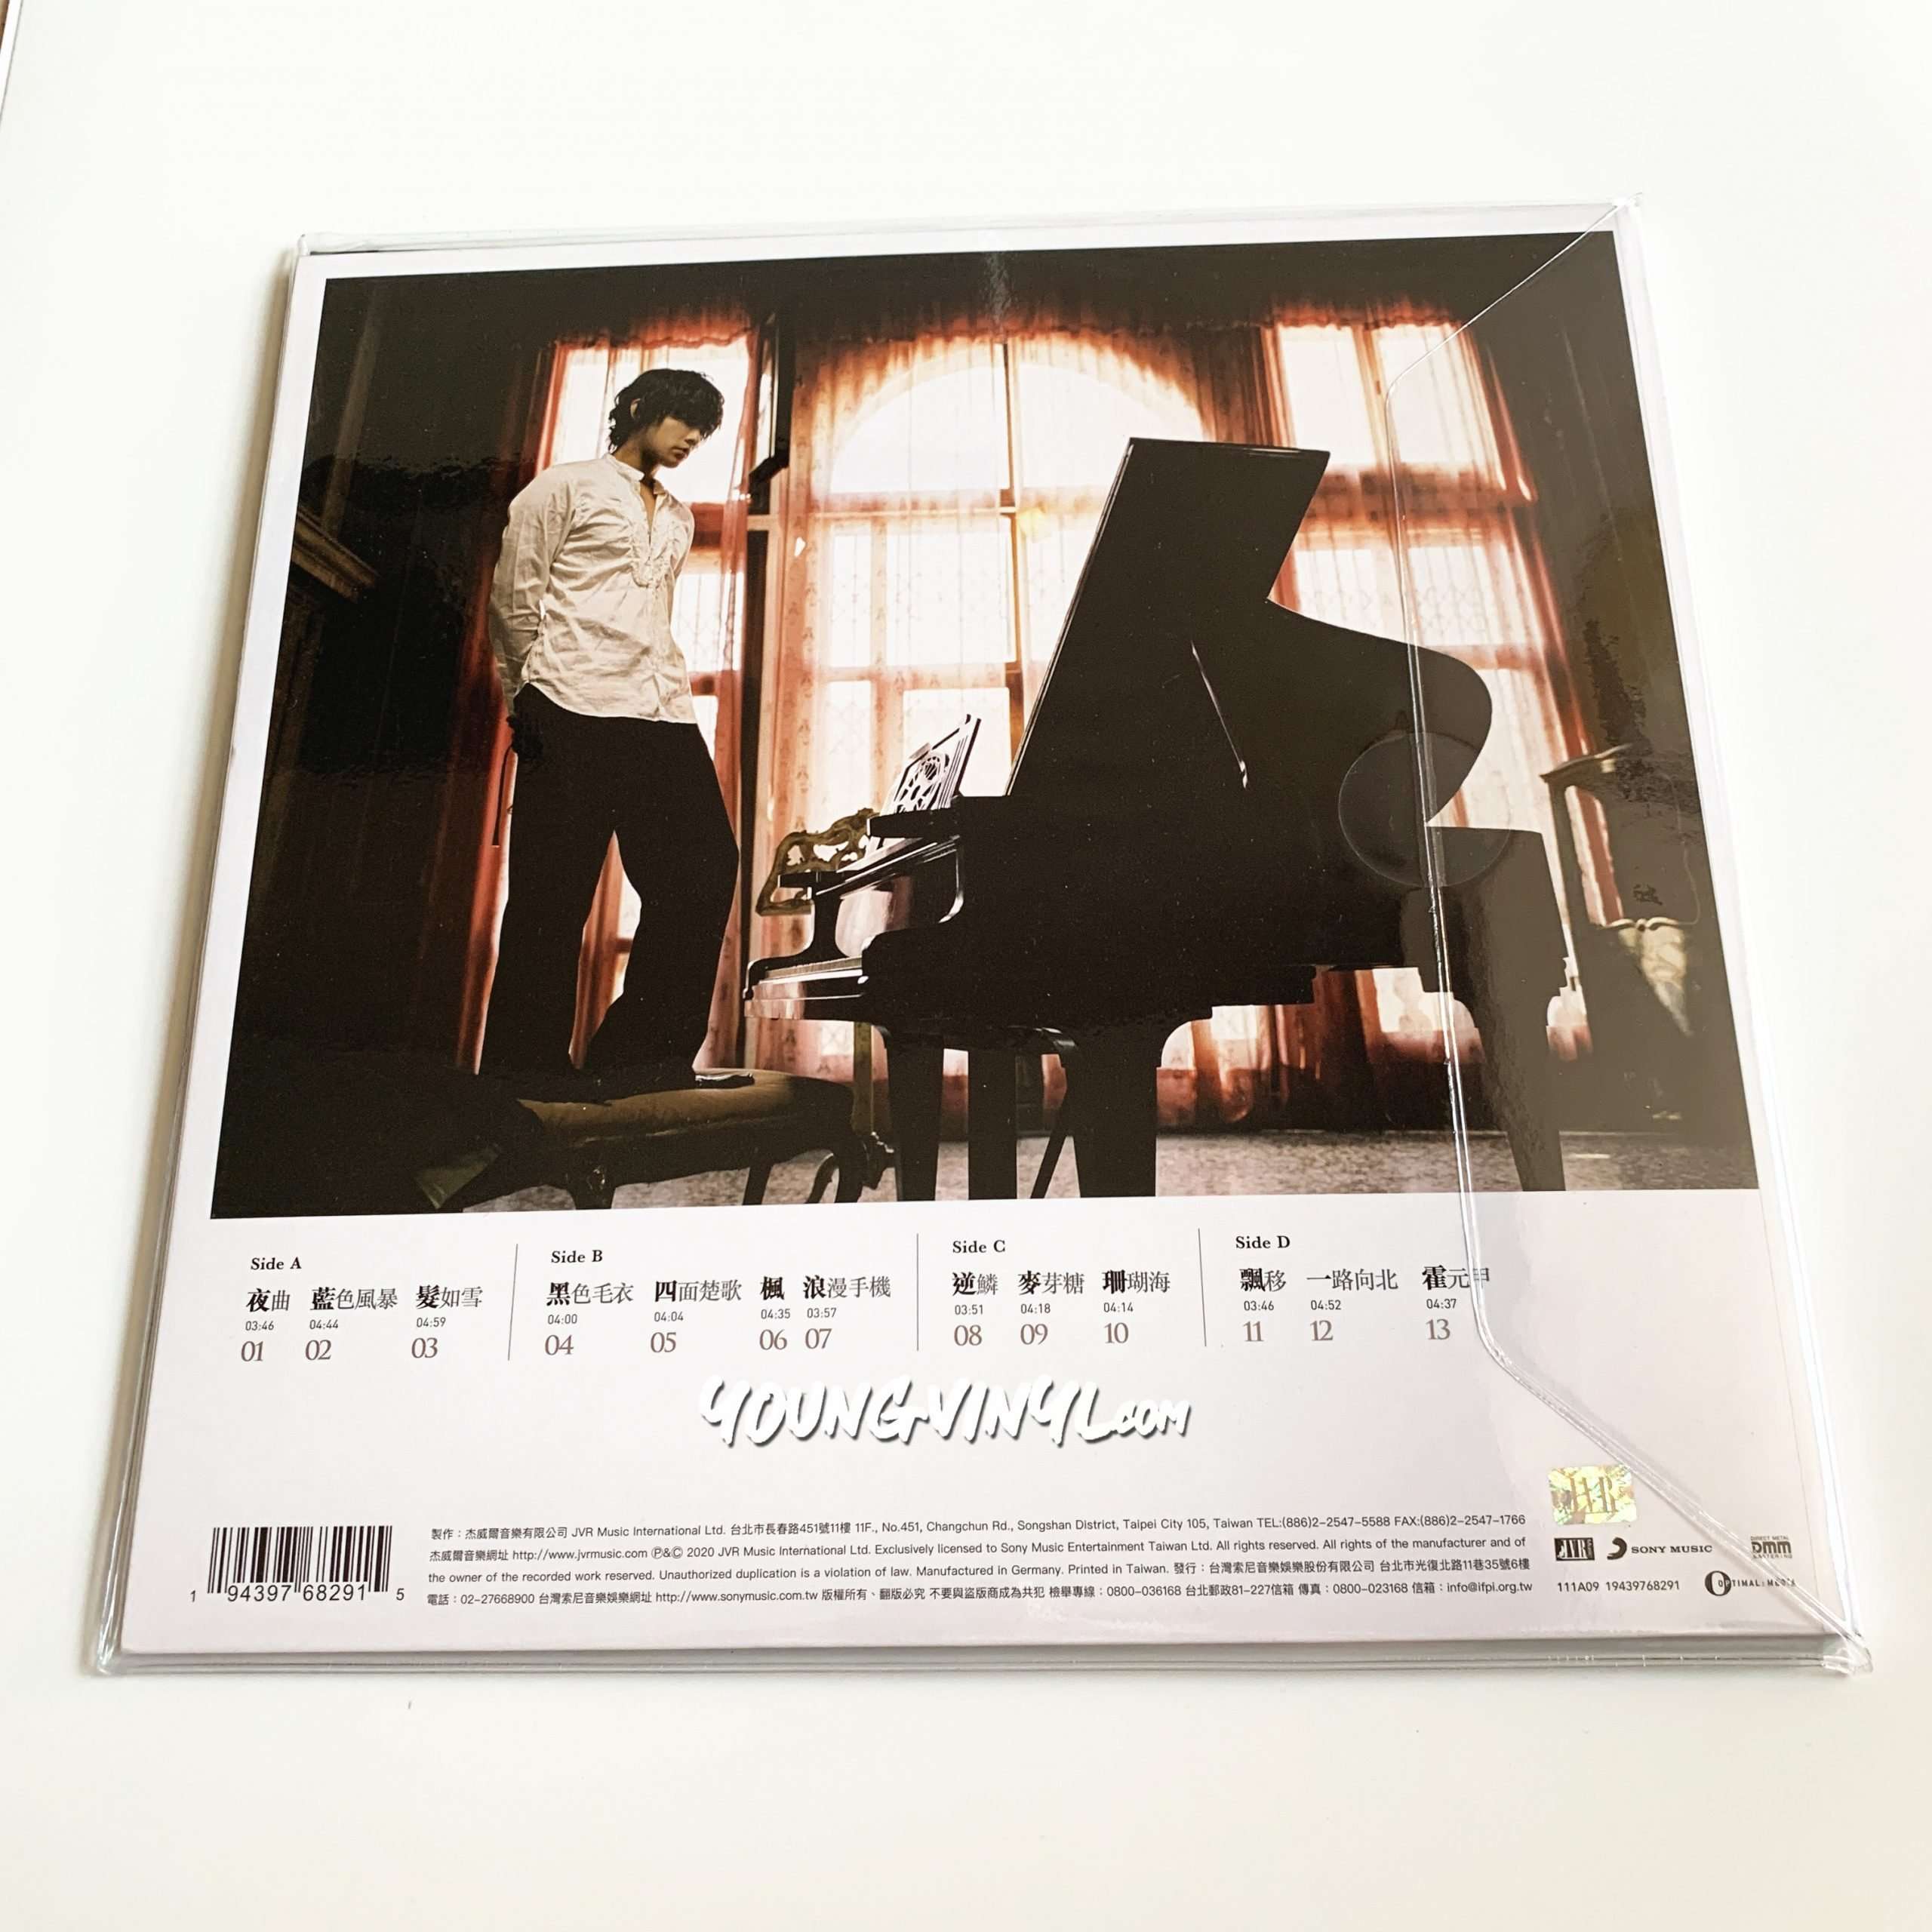 Jay Chou 11月的蕭邦November's Chopin Vinyl Taiwan 2LP 周杰伦周杰倫 